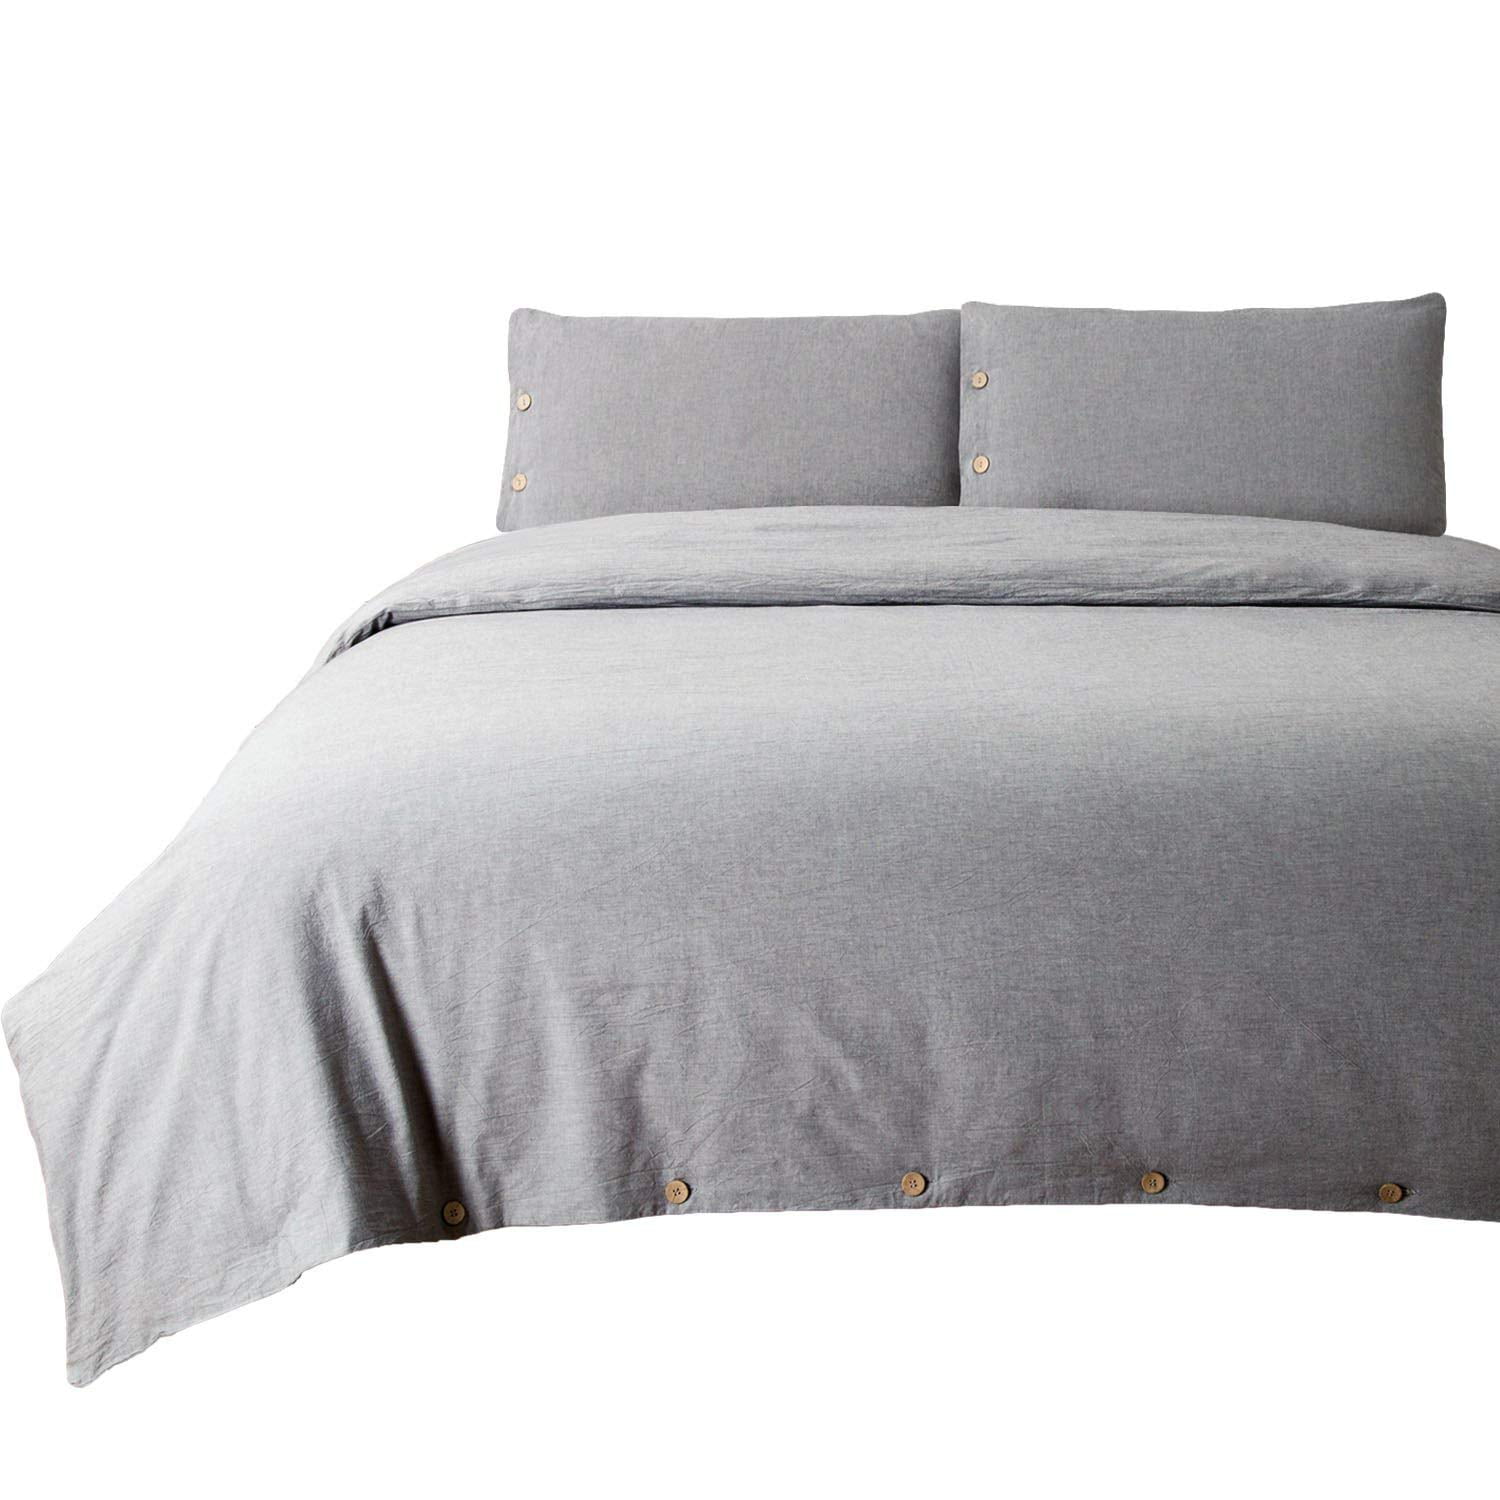 Bedsure 100/% Washed Cotton Duvet Cover Sets Queen Full Size Cream Bedding Set 3 Pieces 1 Duvet Cover + 2 Pillow Shams